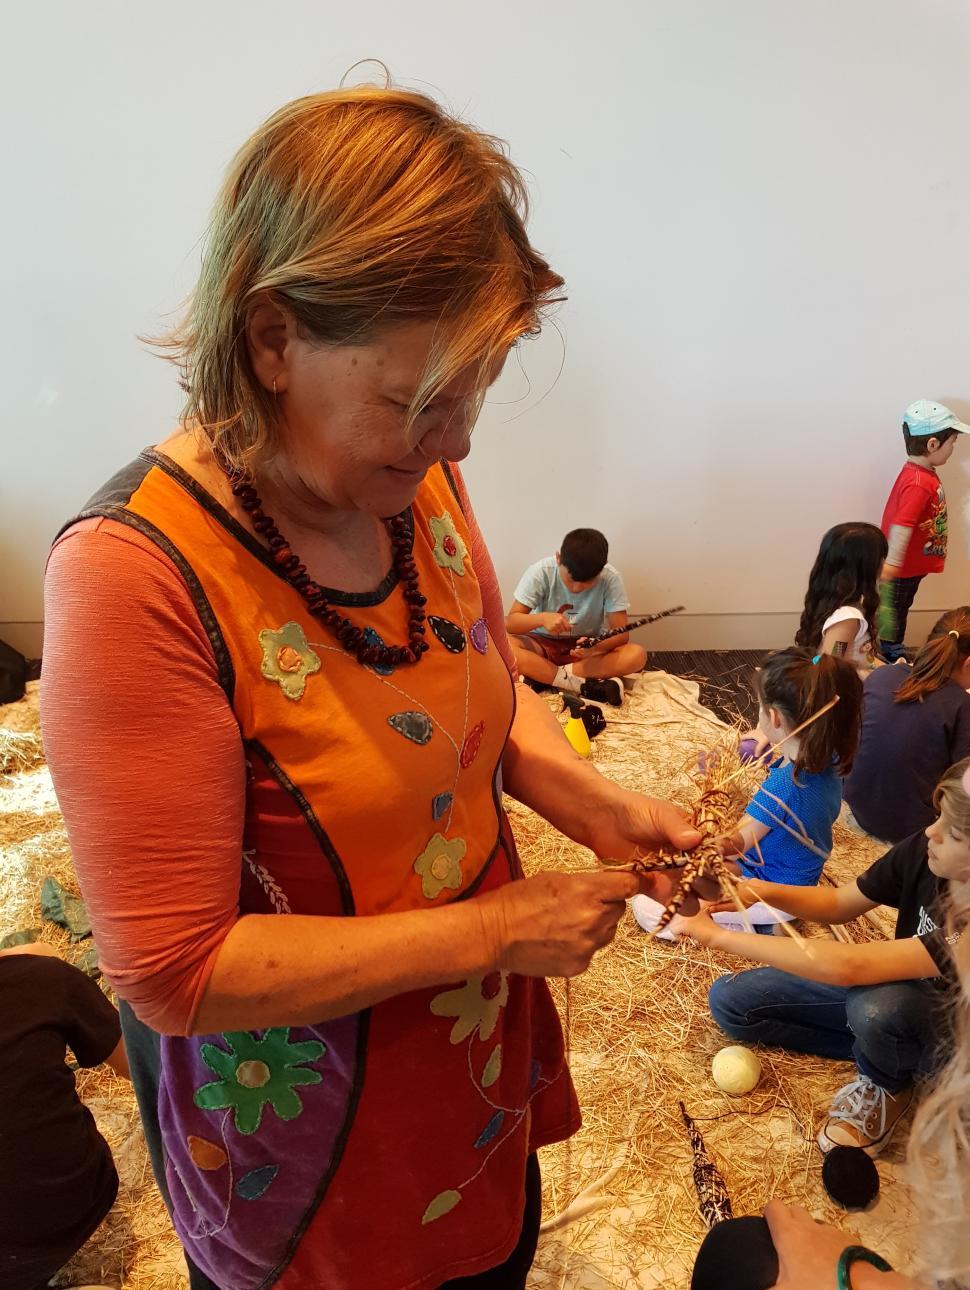 Woman standing weaving raffia with children sitting on floor behind her also weaving